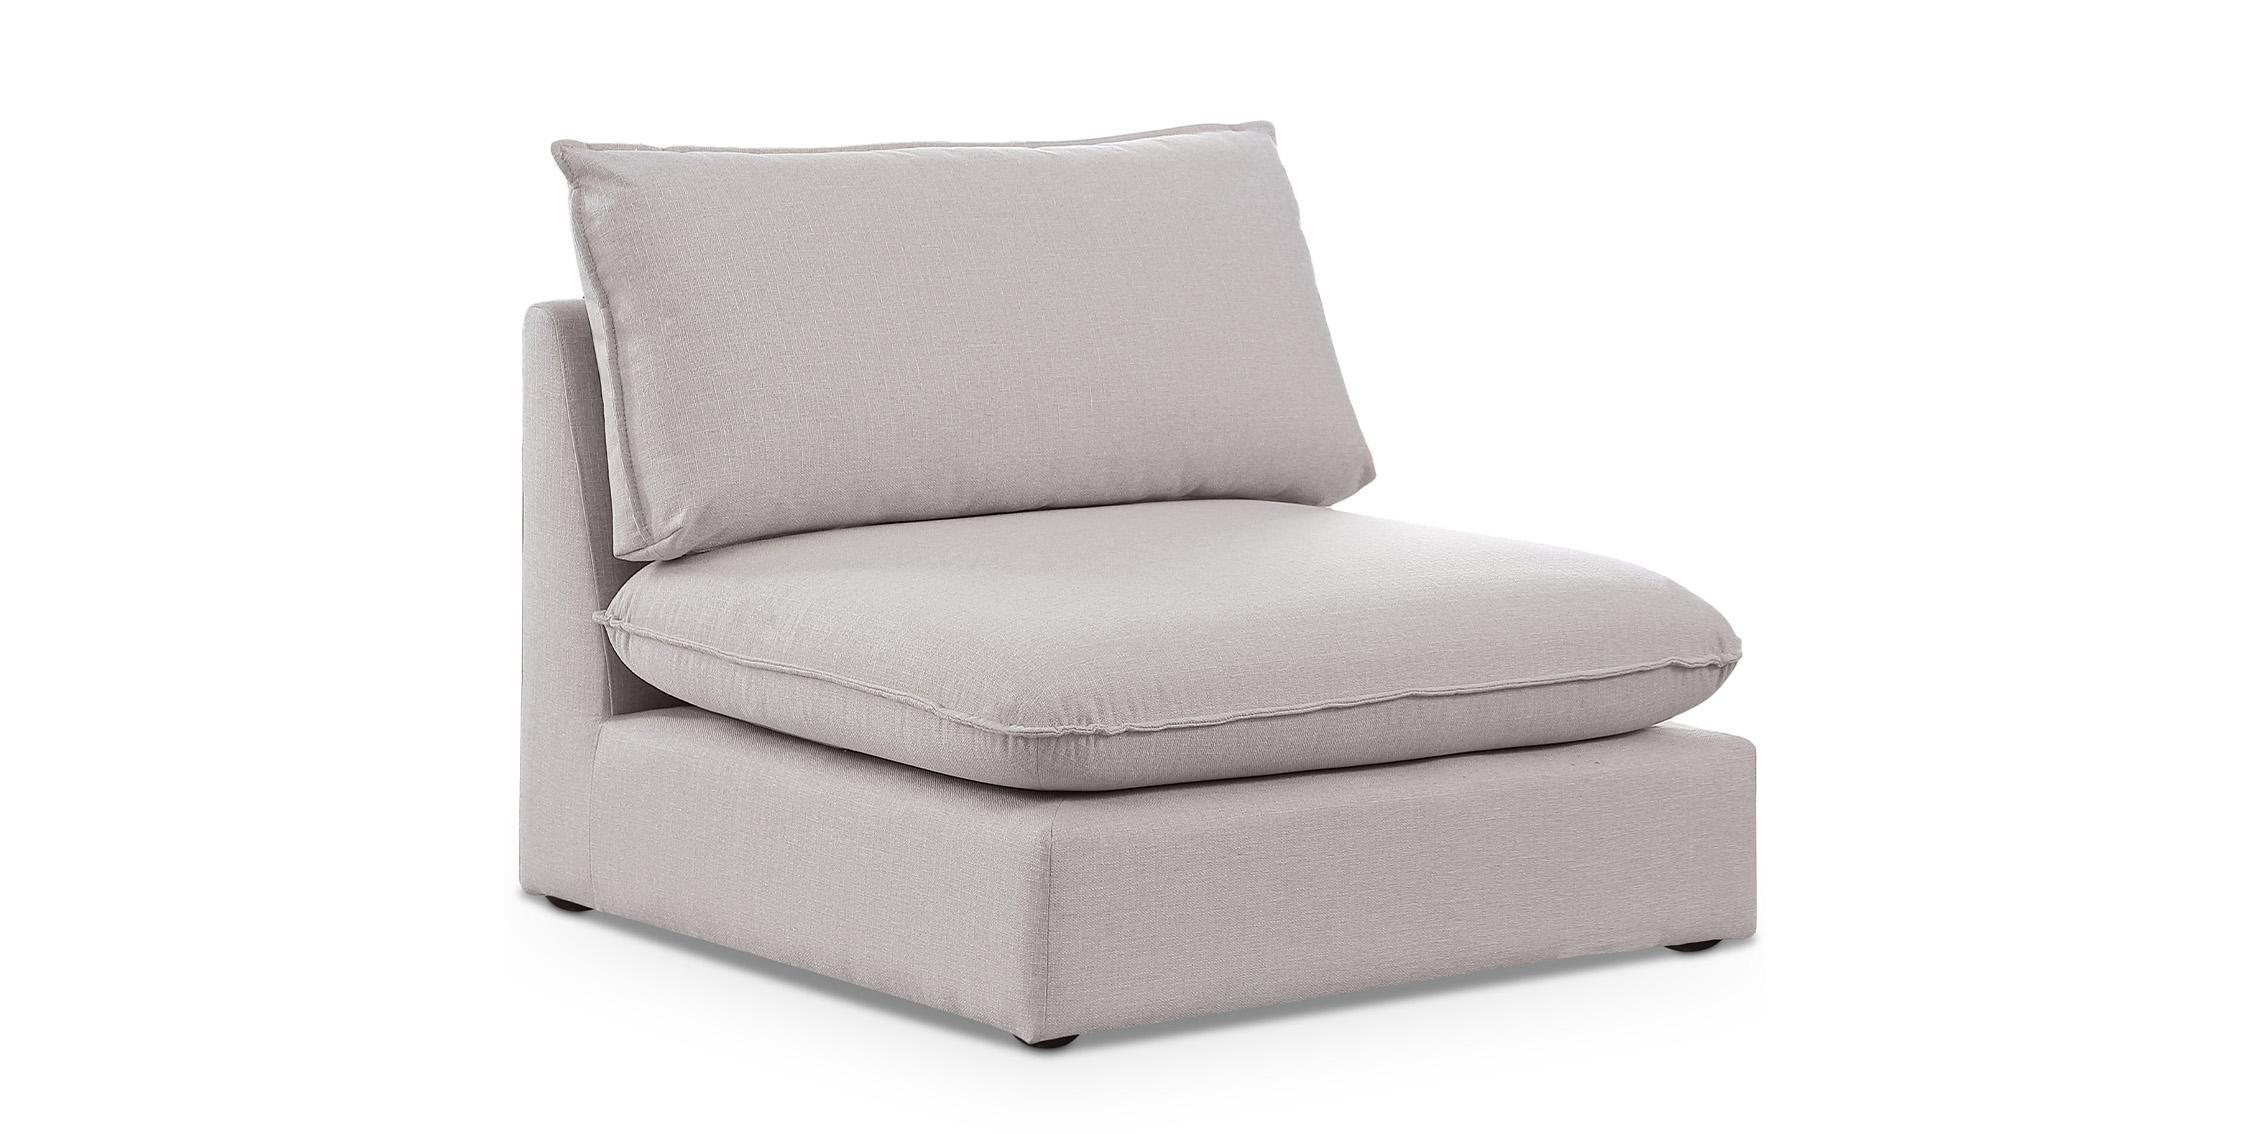 Contemporary, Modern Armless Chair MACKENZIE 688Beige-Armless 688Beige-Armless in Beige Linen